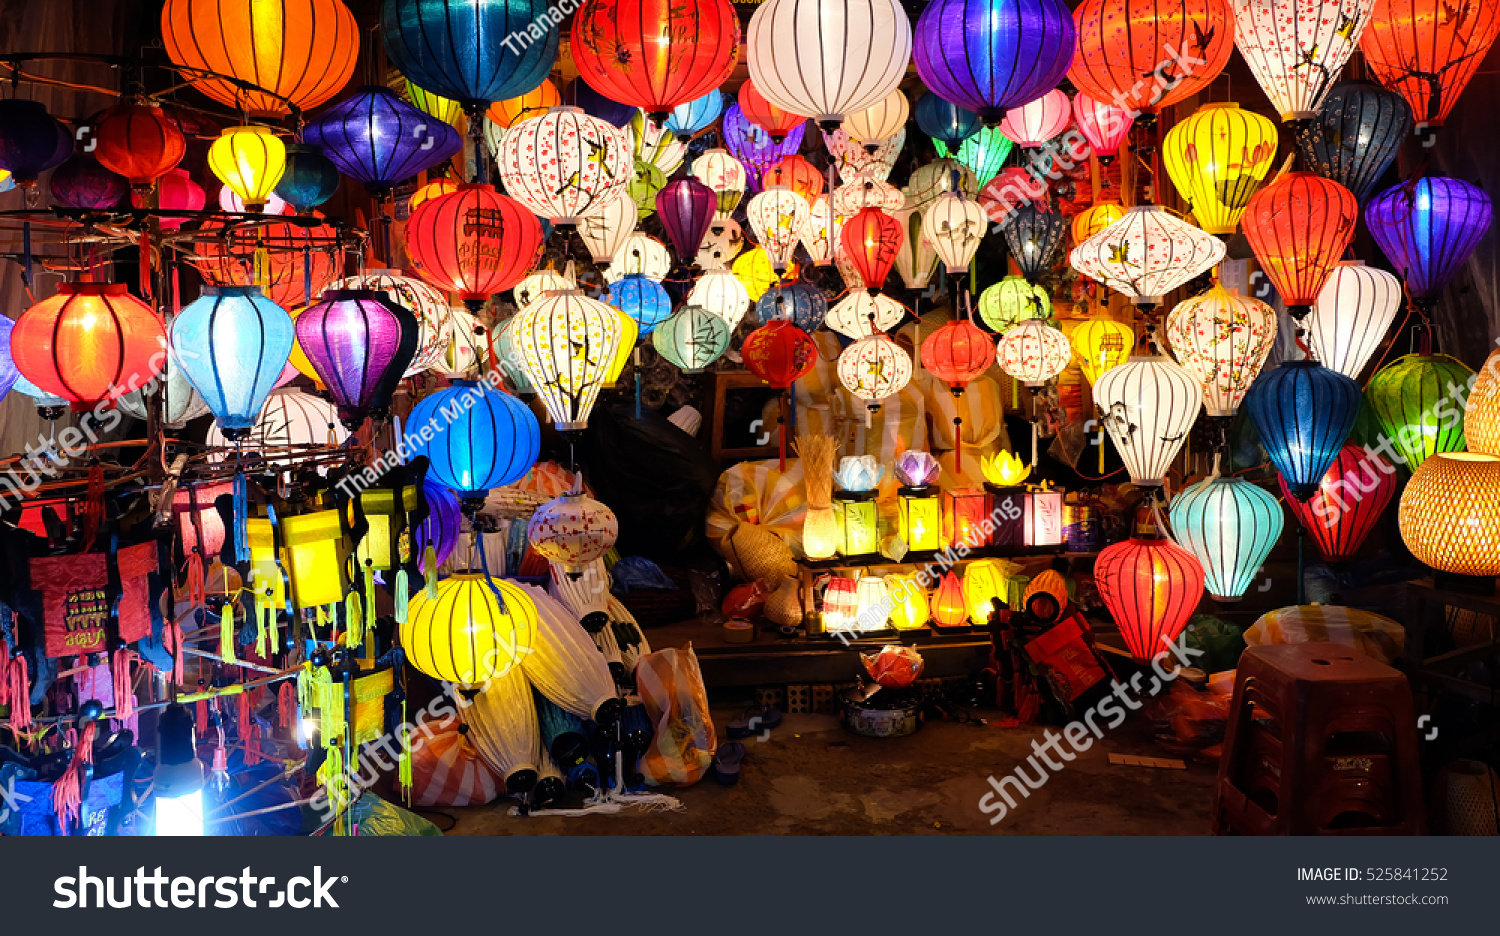 Lanterns at old town shop in Hoi An, Vietnam. #525841252